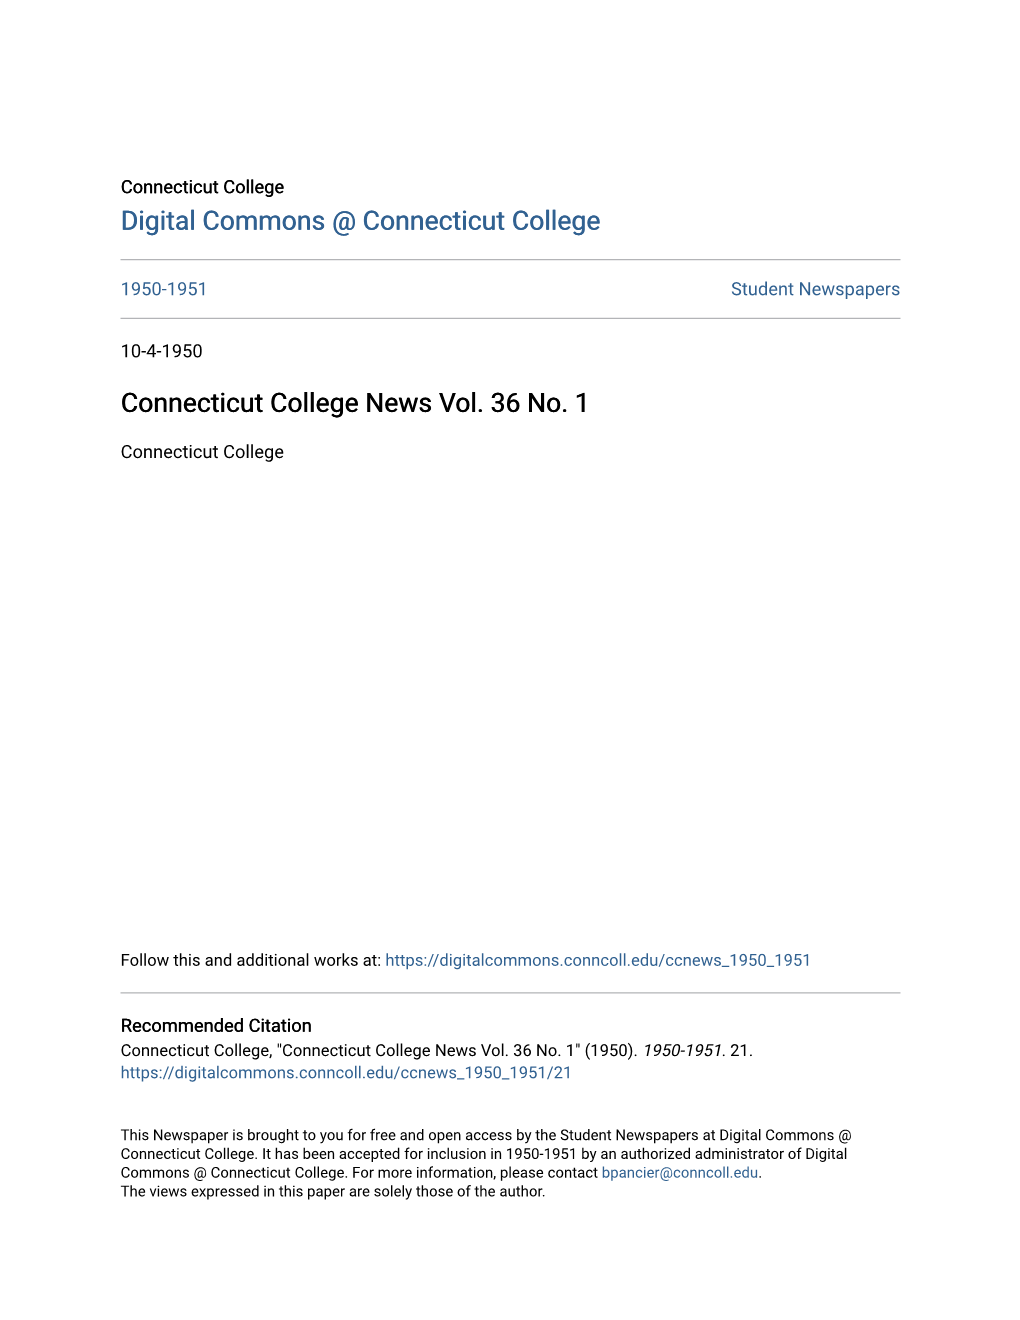 Connecticut College News Vol. 36 No. 1